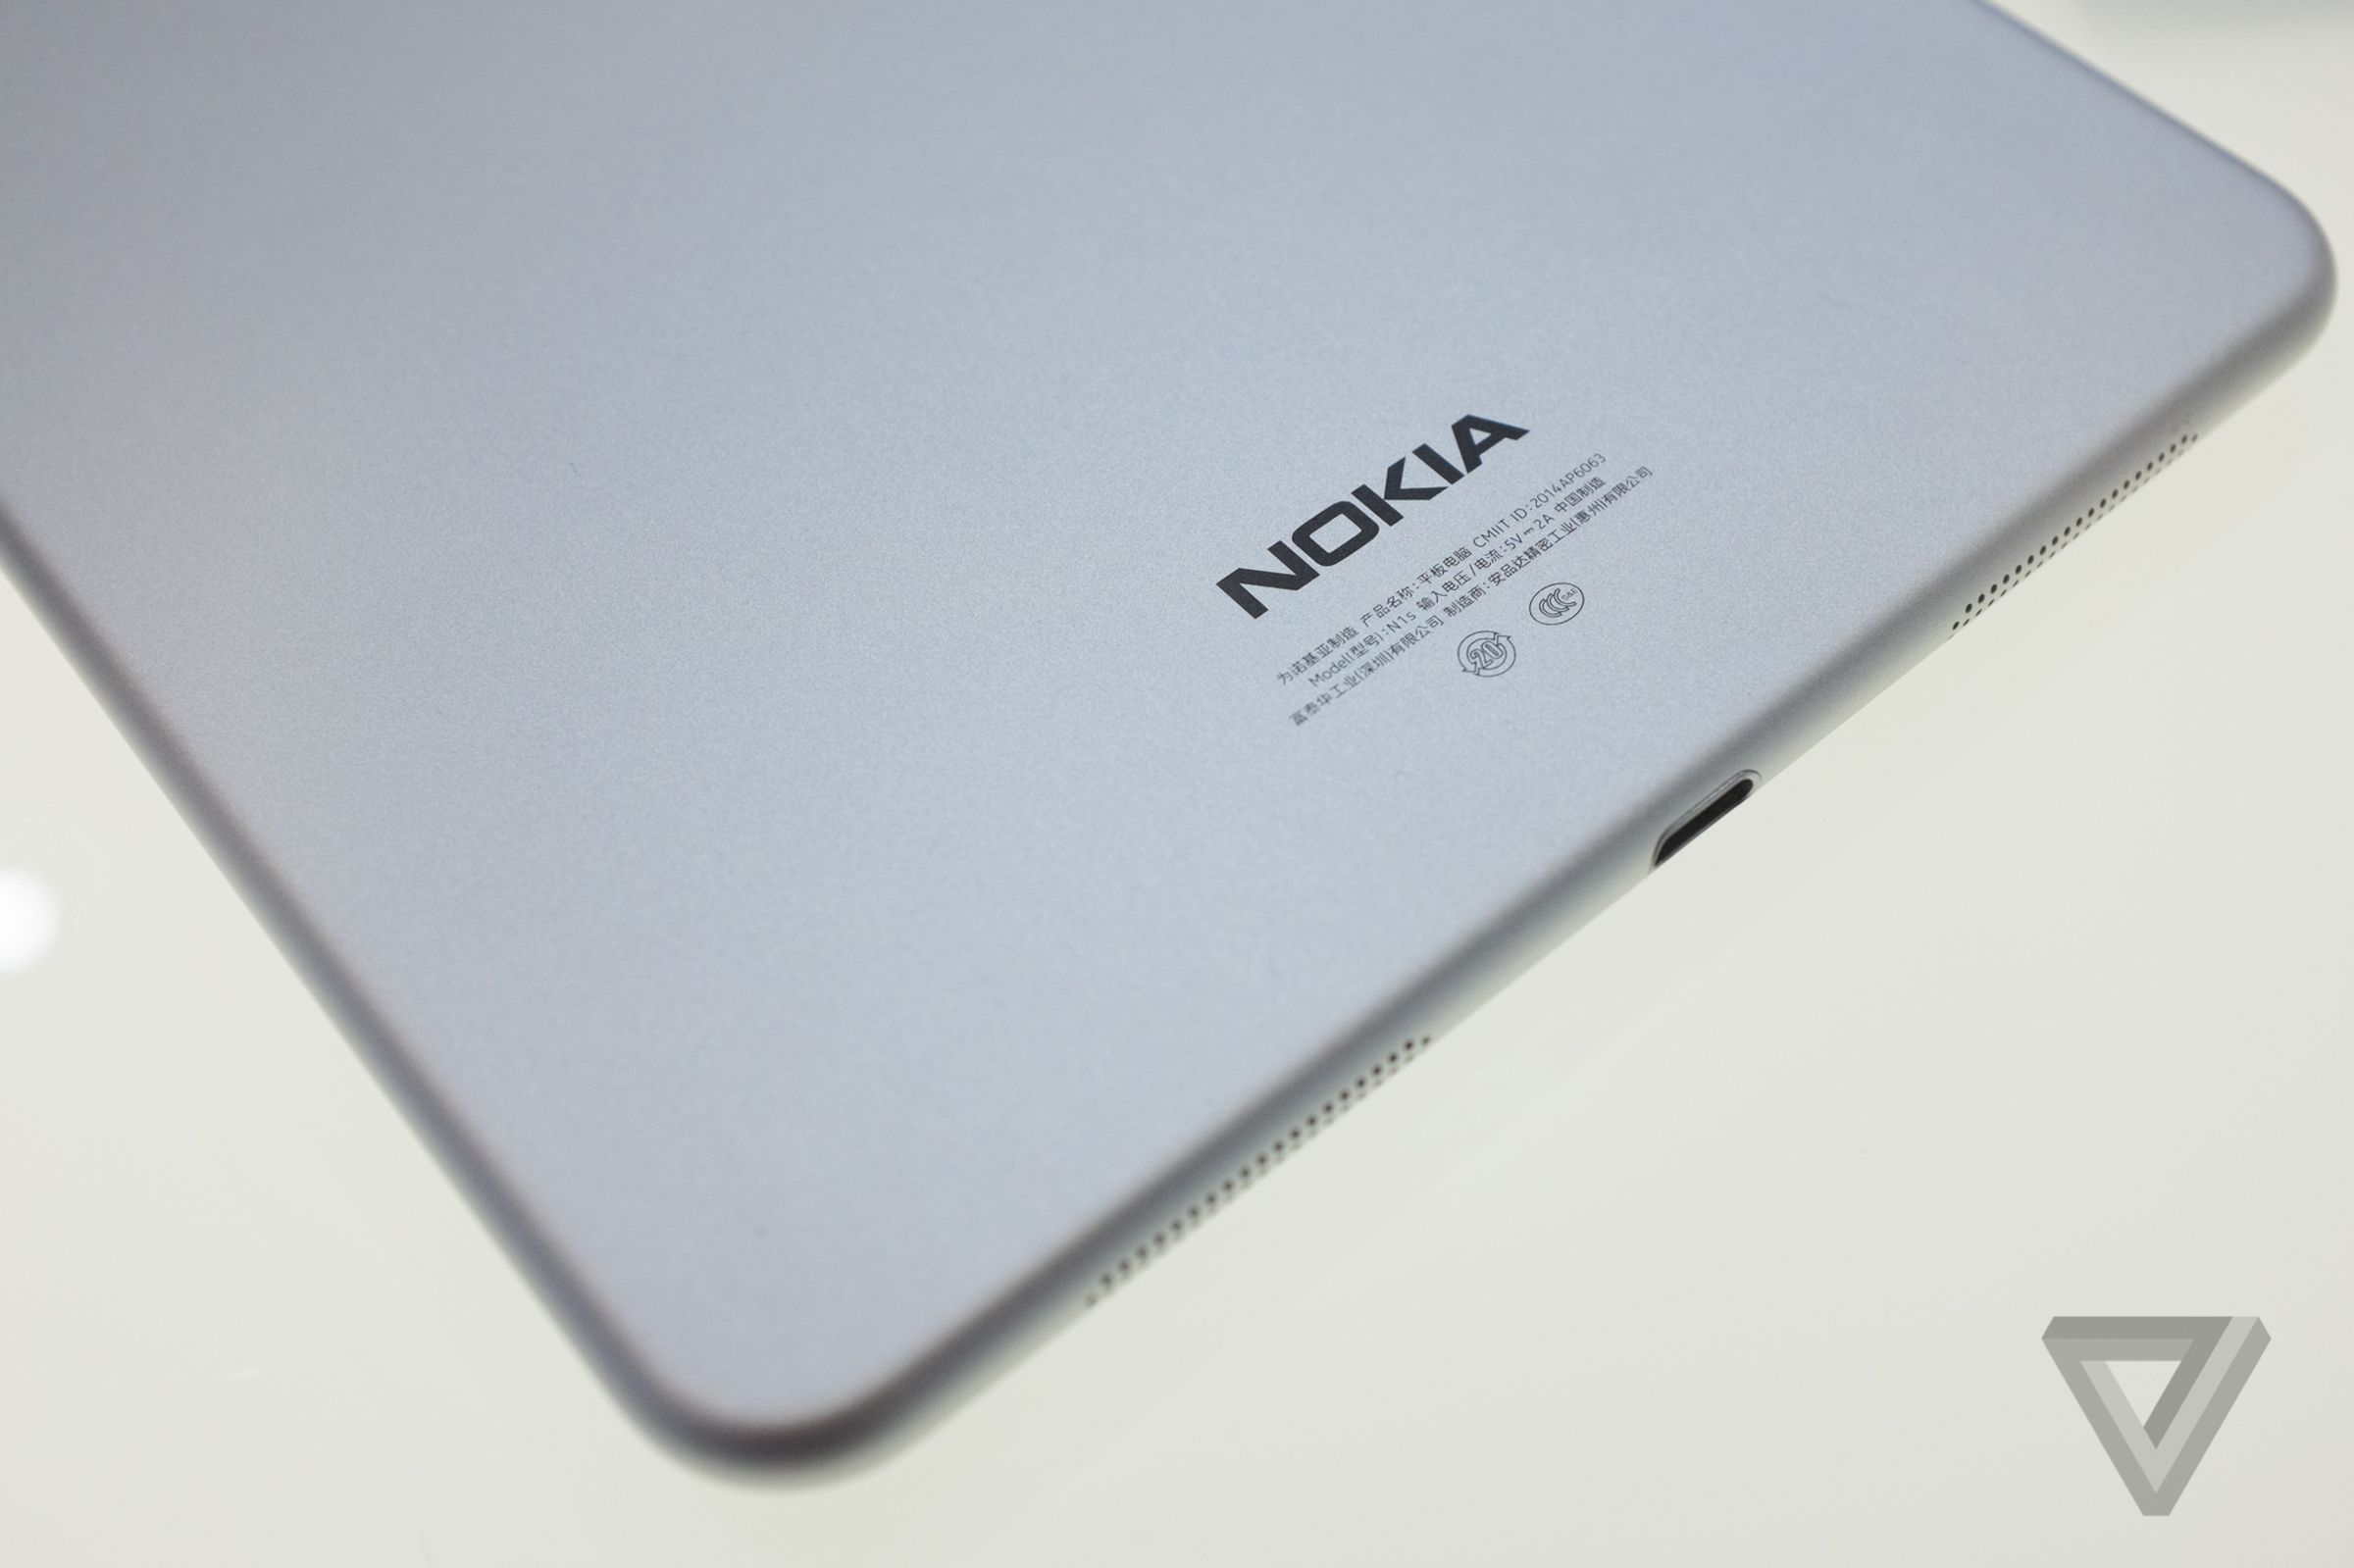 Nokia N1 tablet hands-on photos